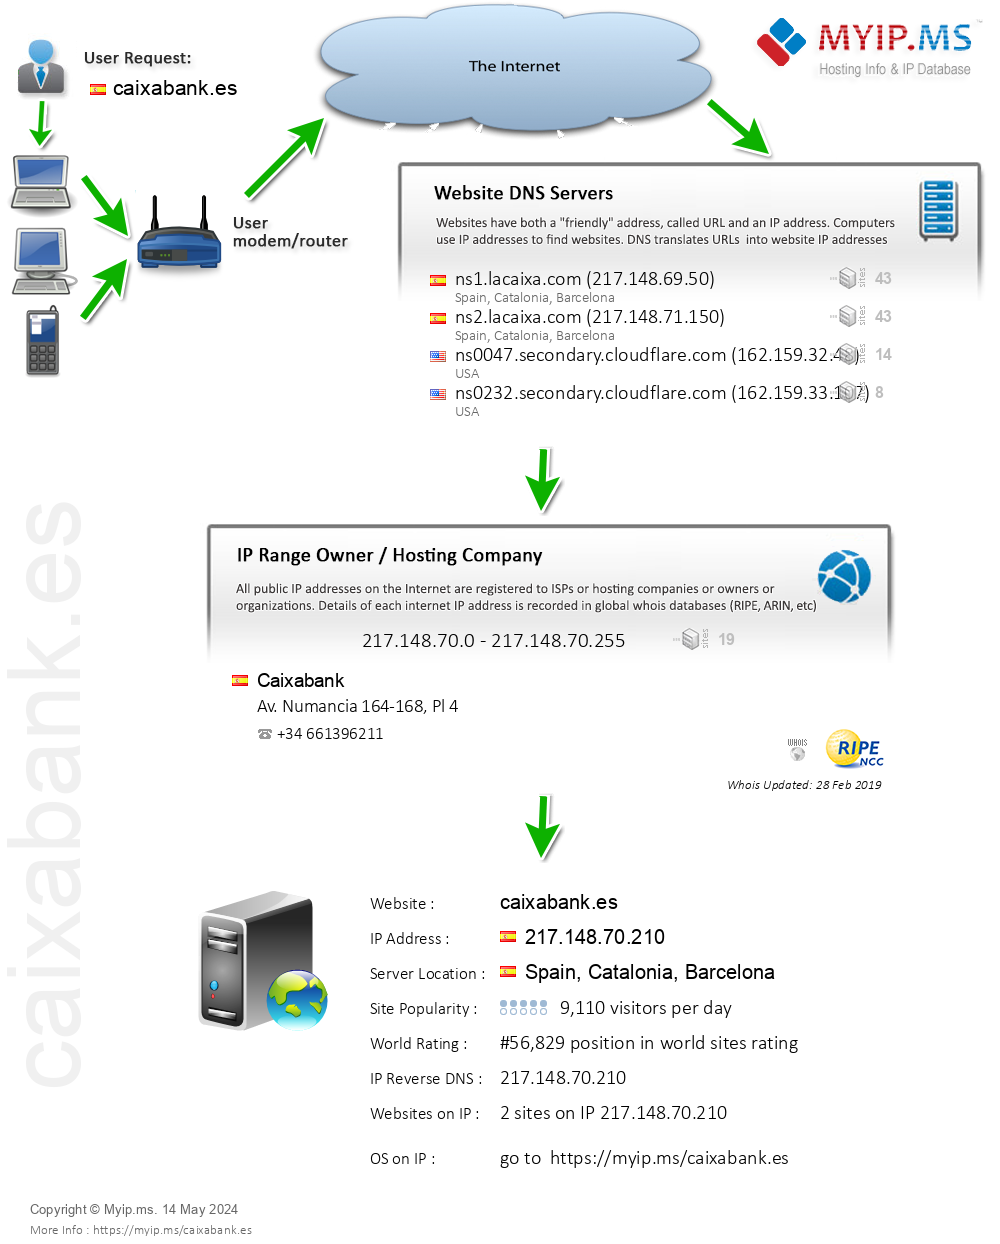 Caixabank.es - Website Hosting Visual IP Diagram